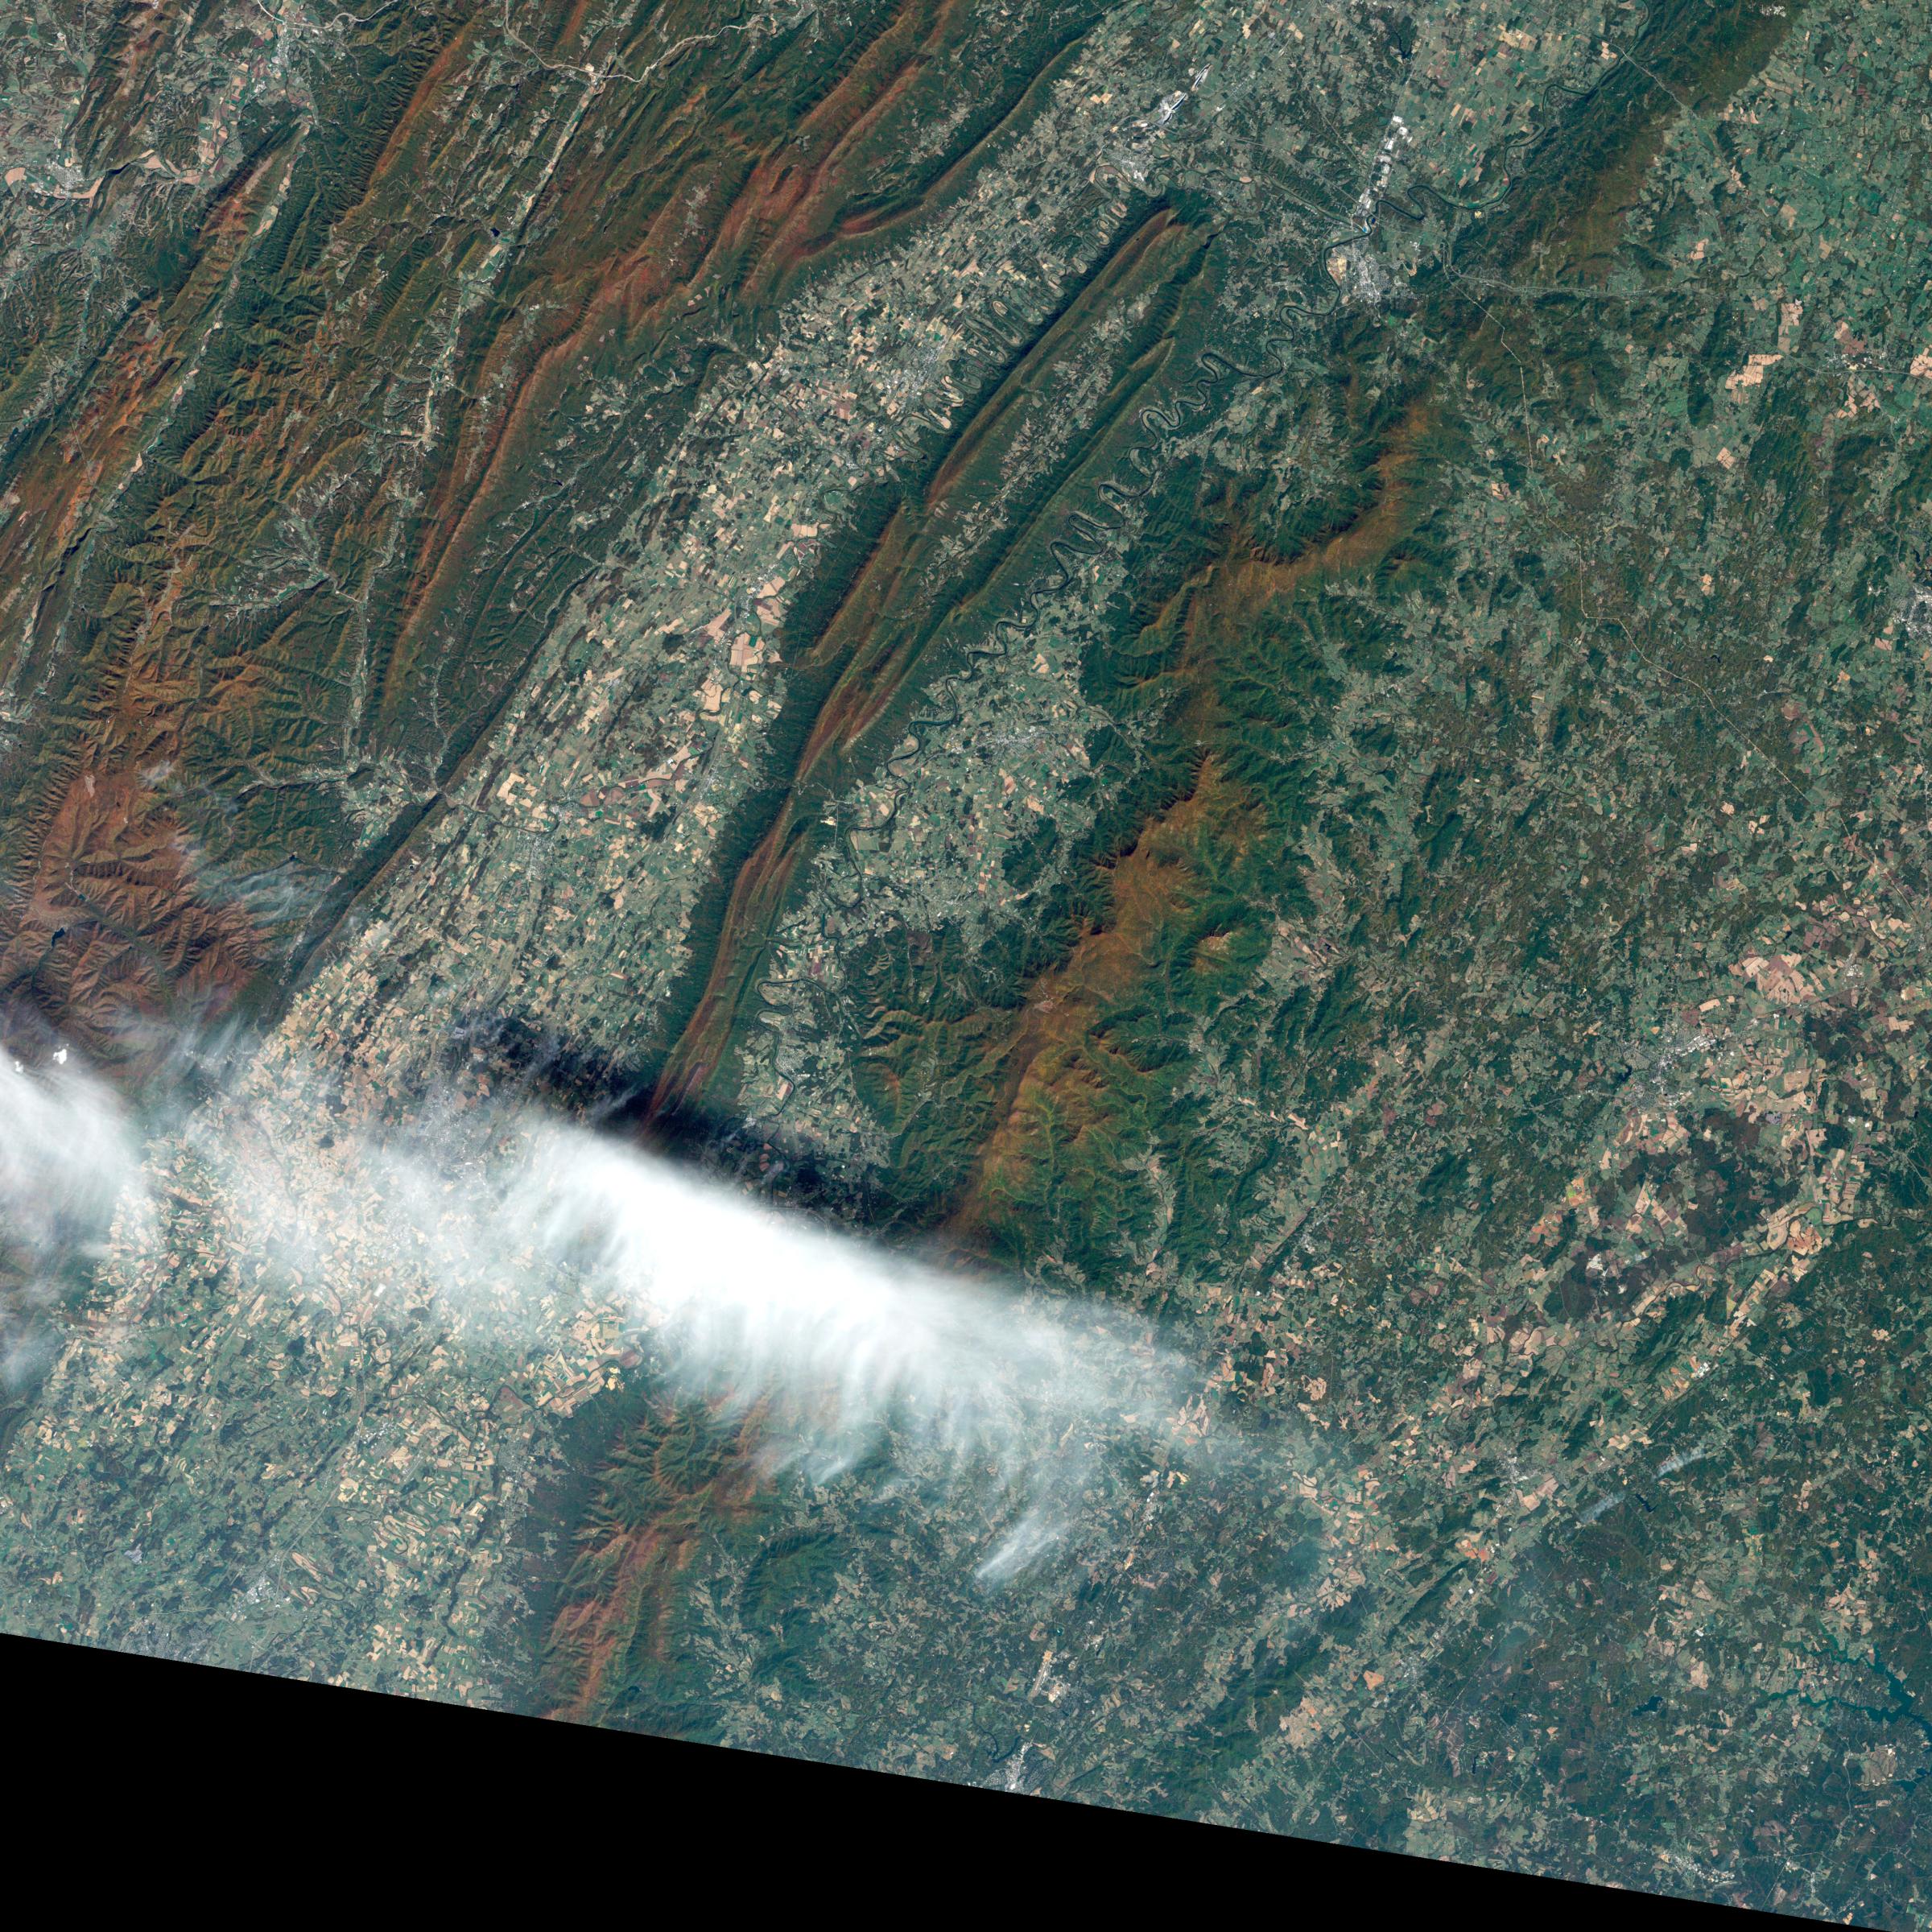 NASA - Shenandoah National Park